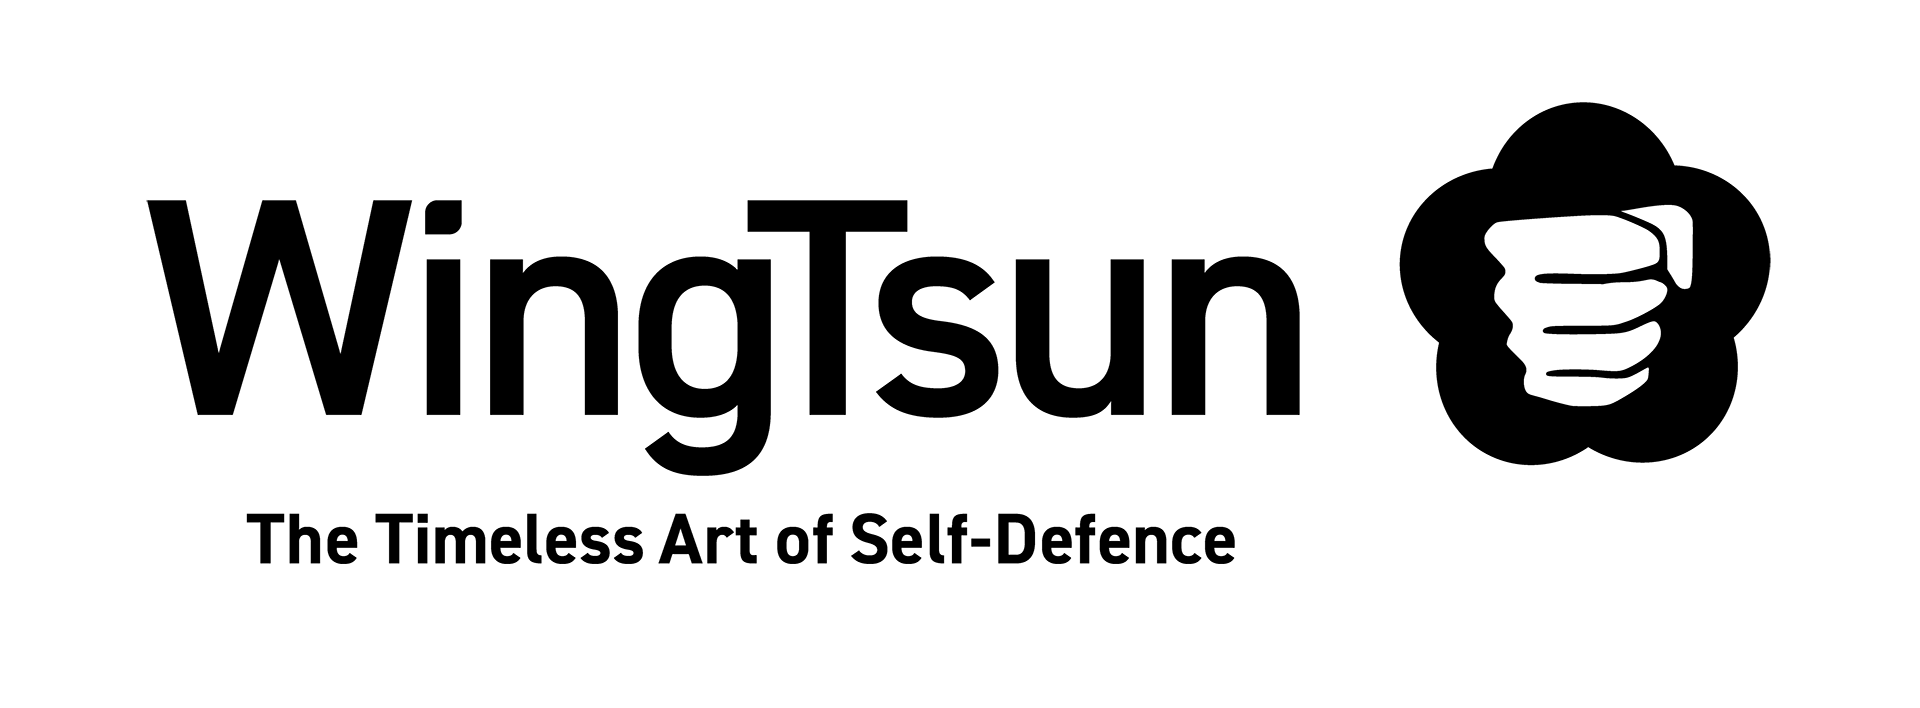 WingTsun Logo m Tagline Black 1920